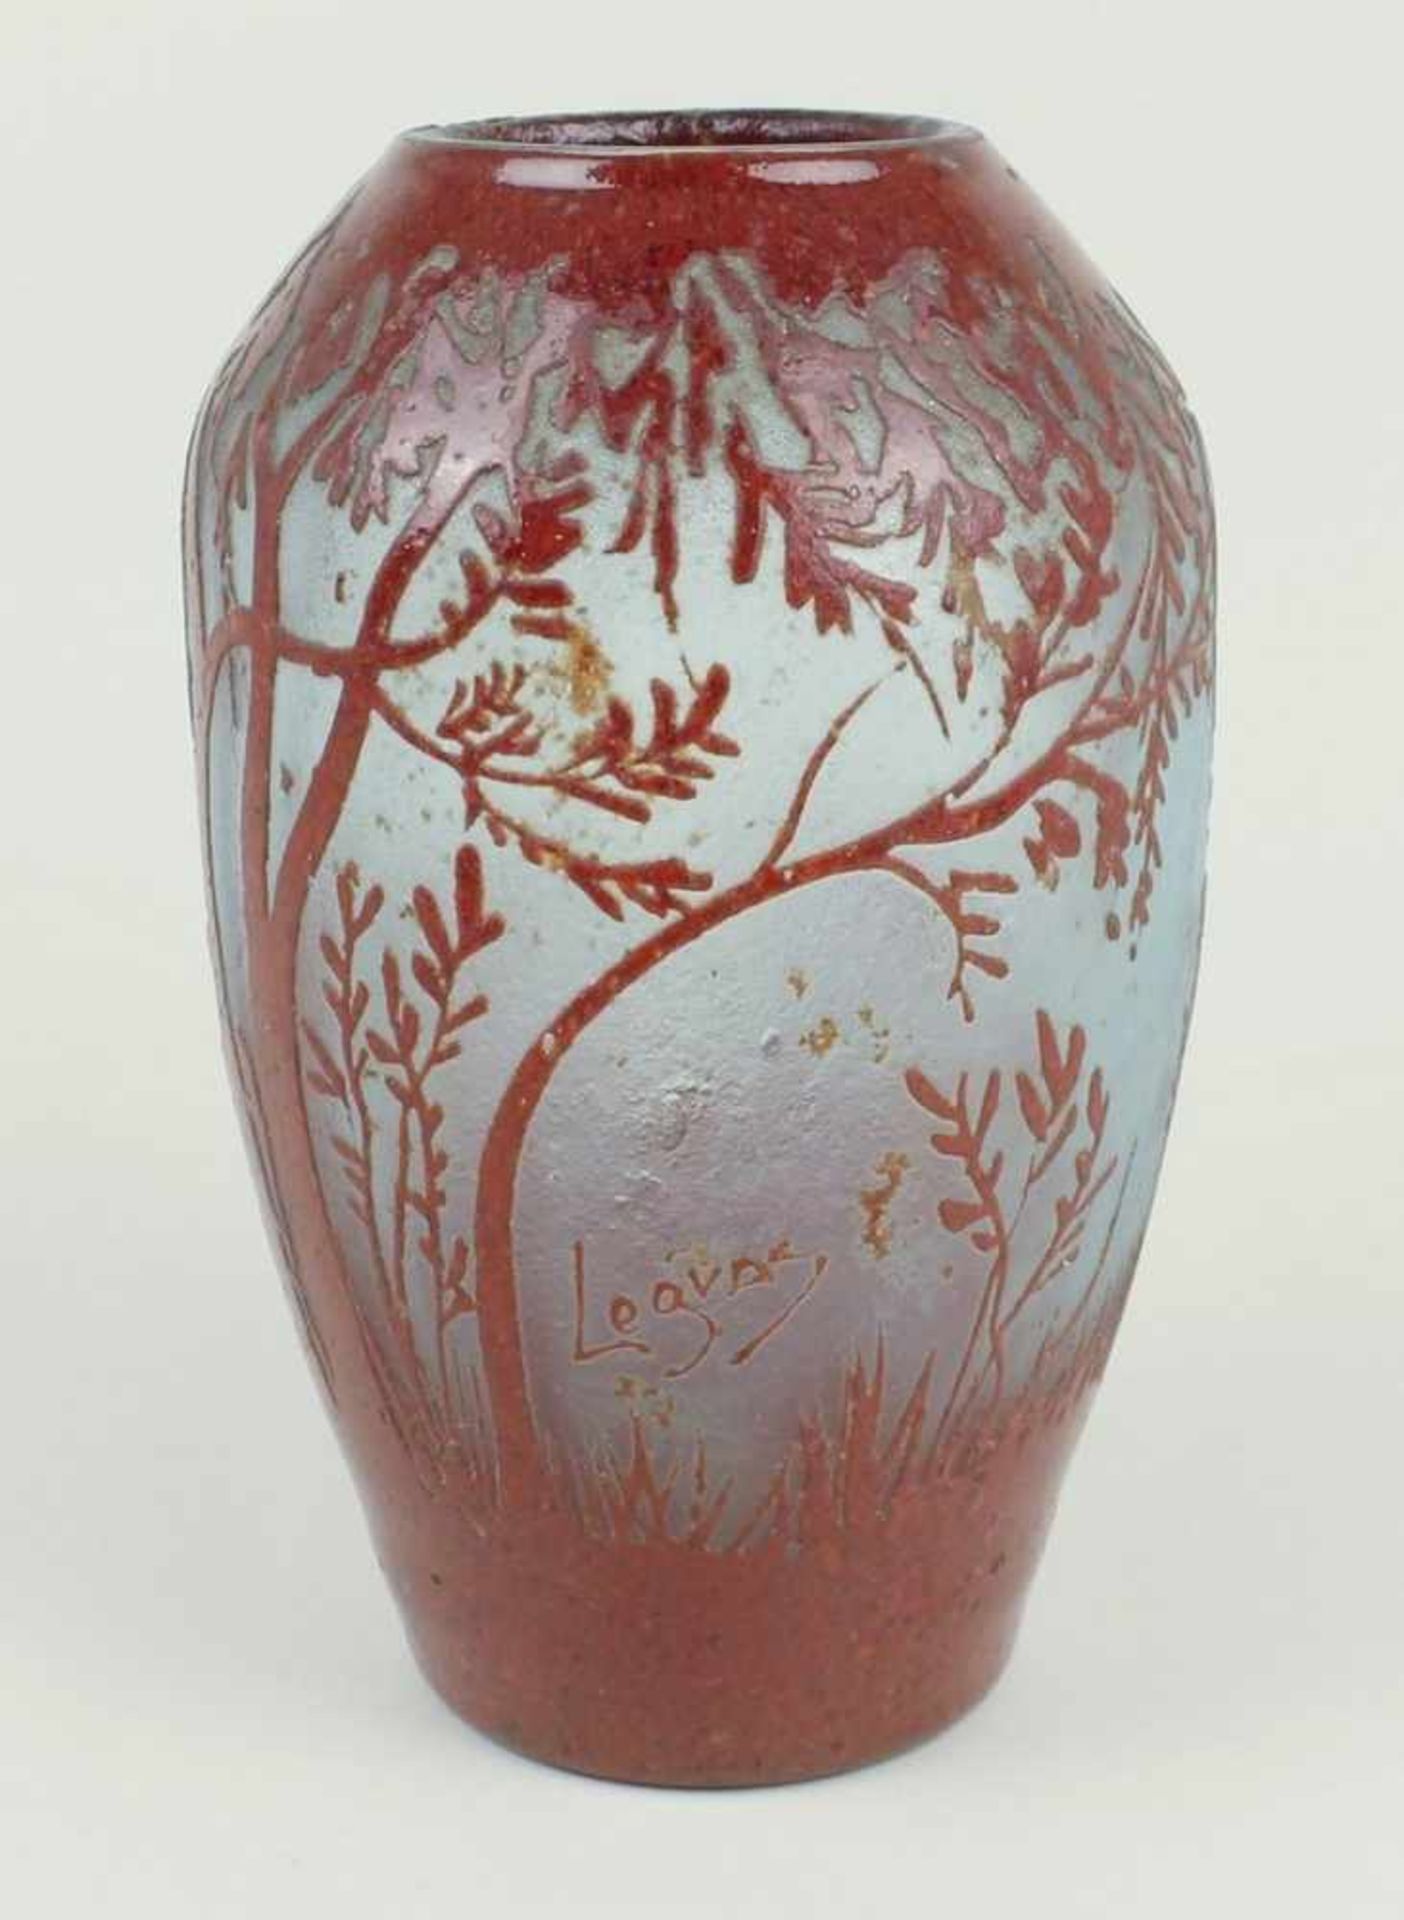 Legras - Vase um 1900/14, Jugendstil, Legras & Cie, Verreries de Saint-Denise, farbloses - Bild 3 aus 4